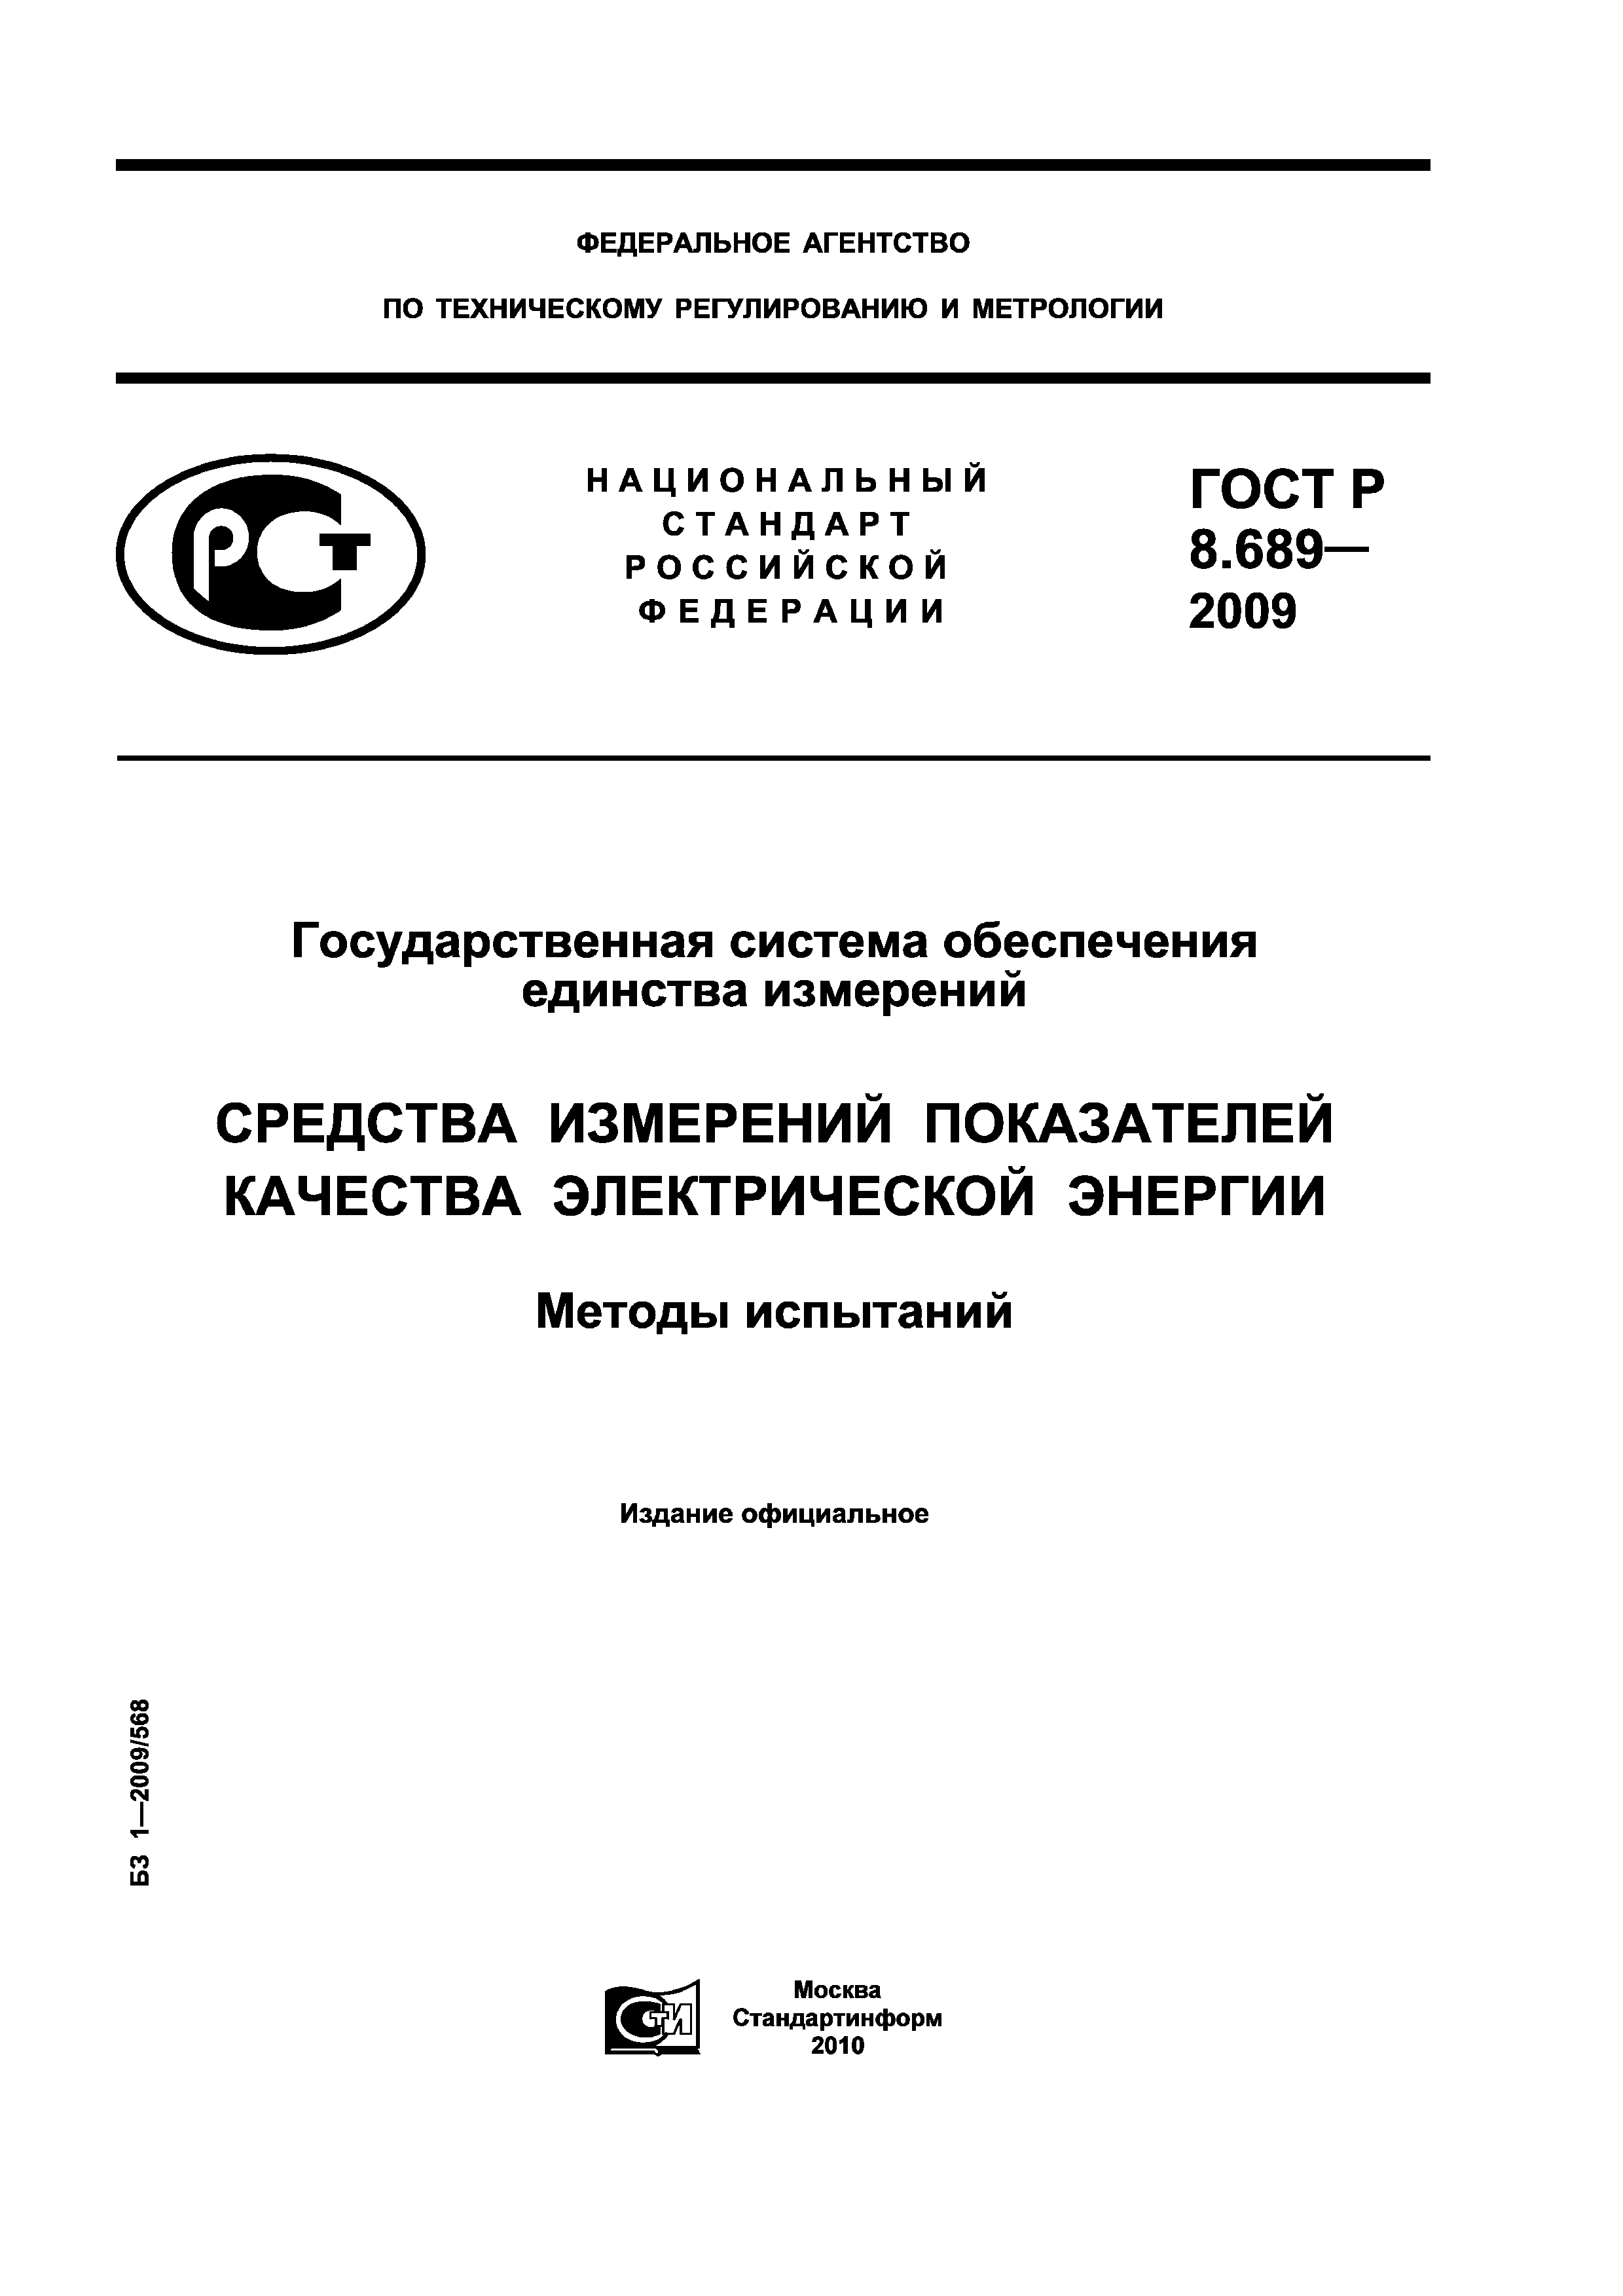 ГОСТ Р 8.689-2009